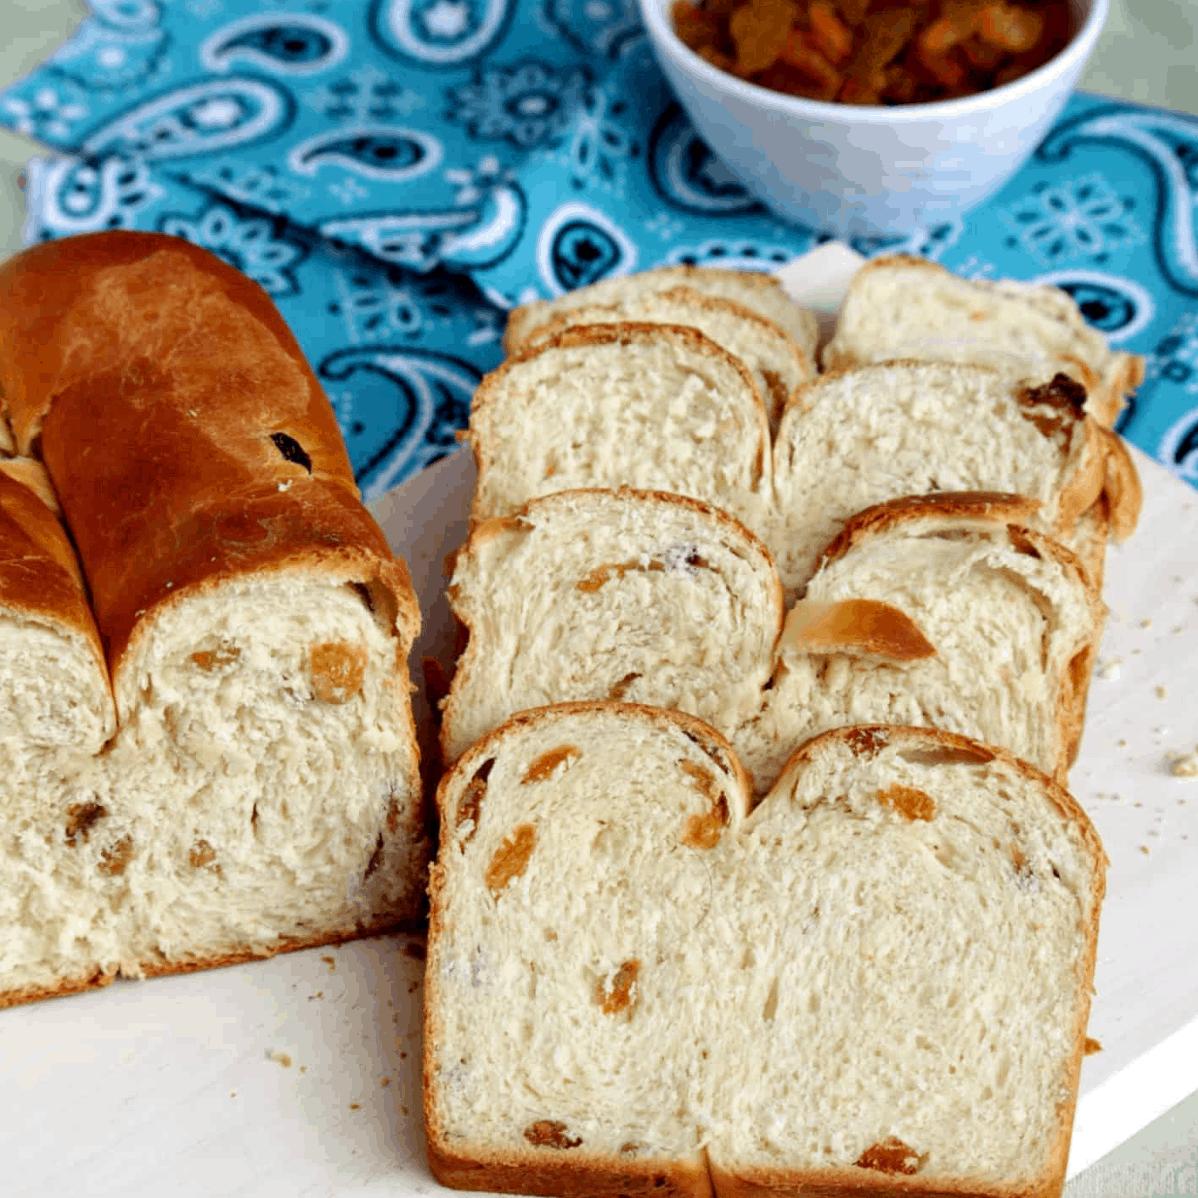  Slice into this delicious and unique Irish Freckle Bread!